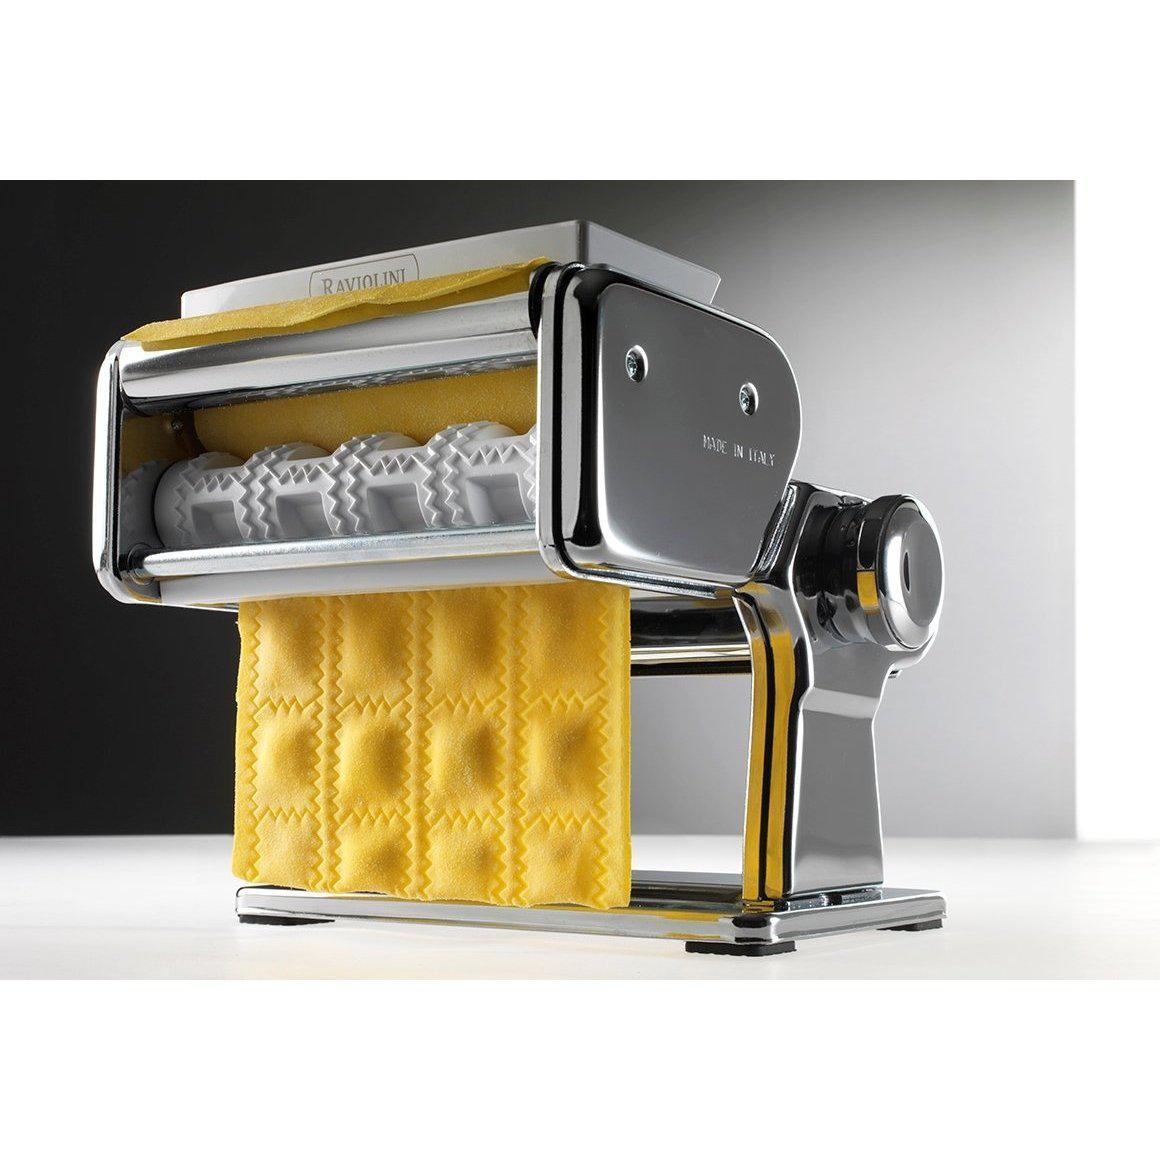 Marcato - Pasta machine Ampia 150 Classic